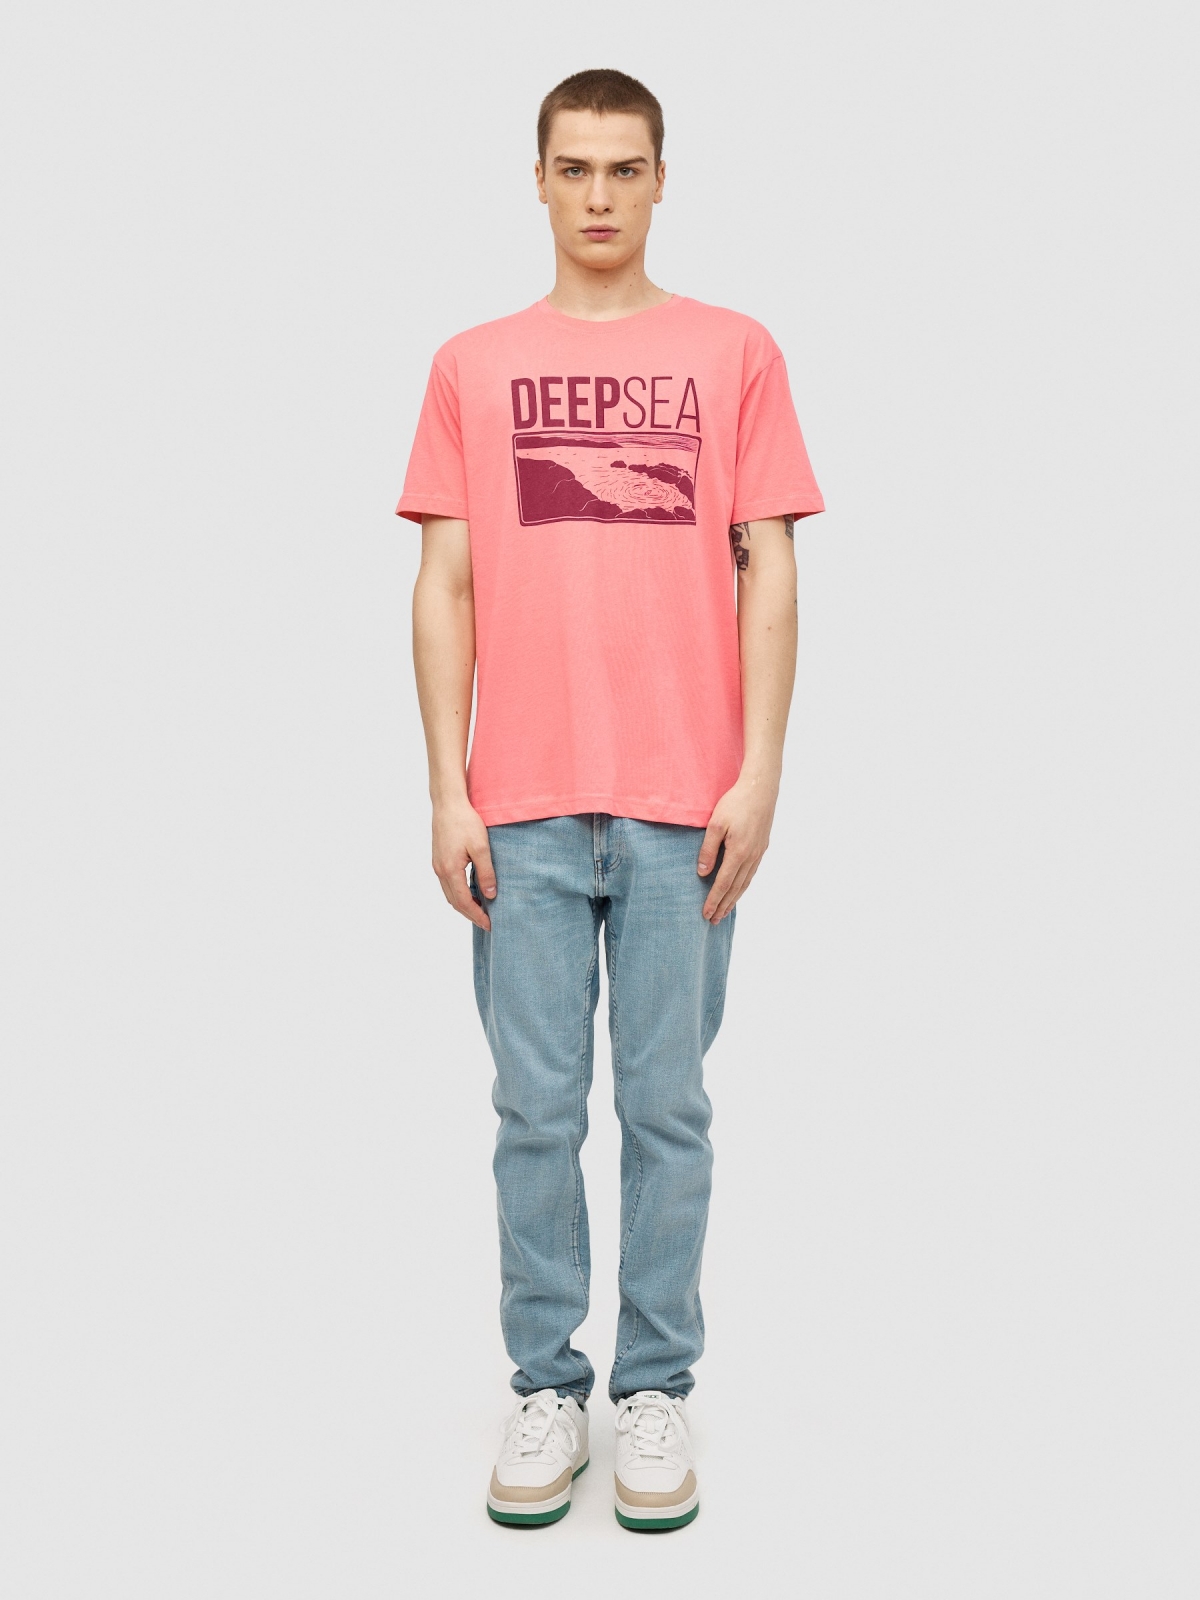 Deep Sea t-shirt pink front view